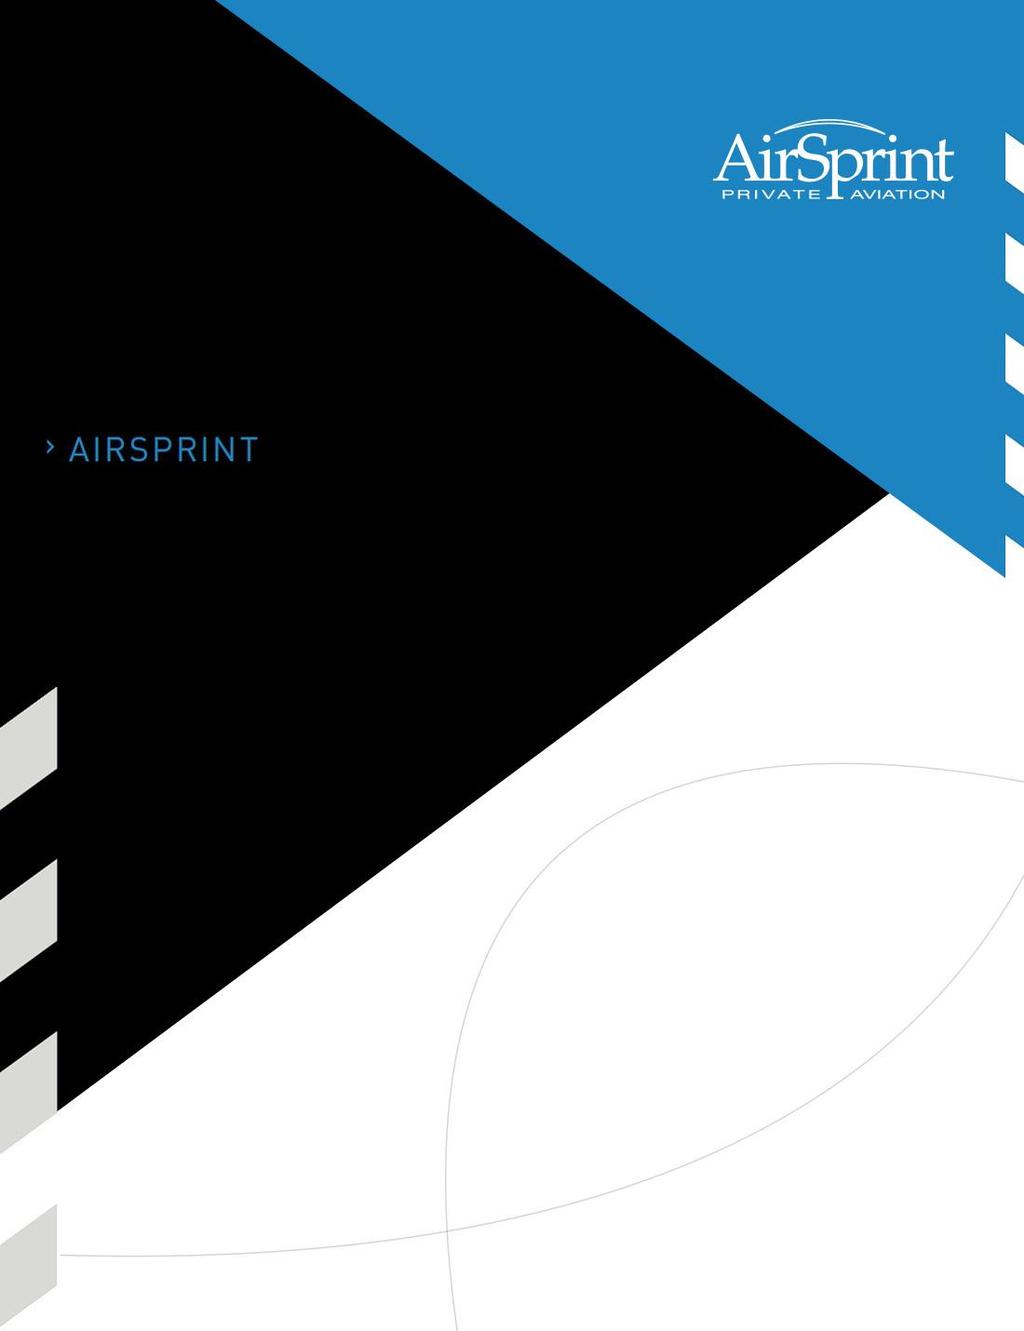 TARIFFS: a) Domestic Tariff CTA(A) Revision 5 22DEC16 b) AirSprint